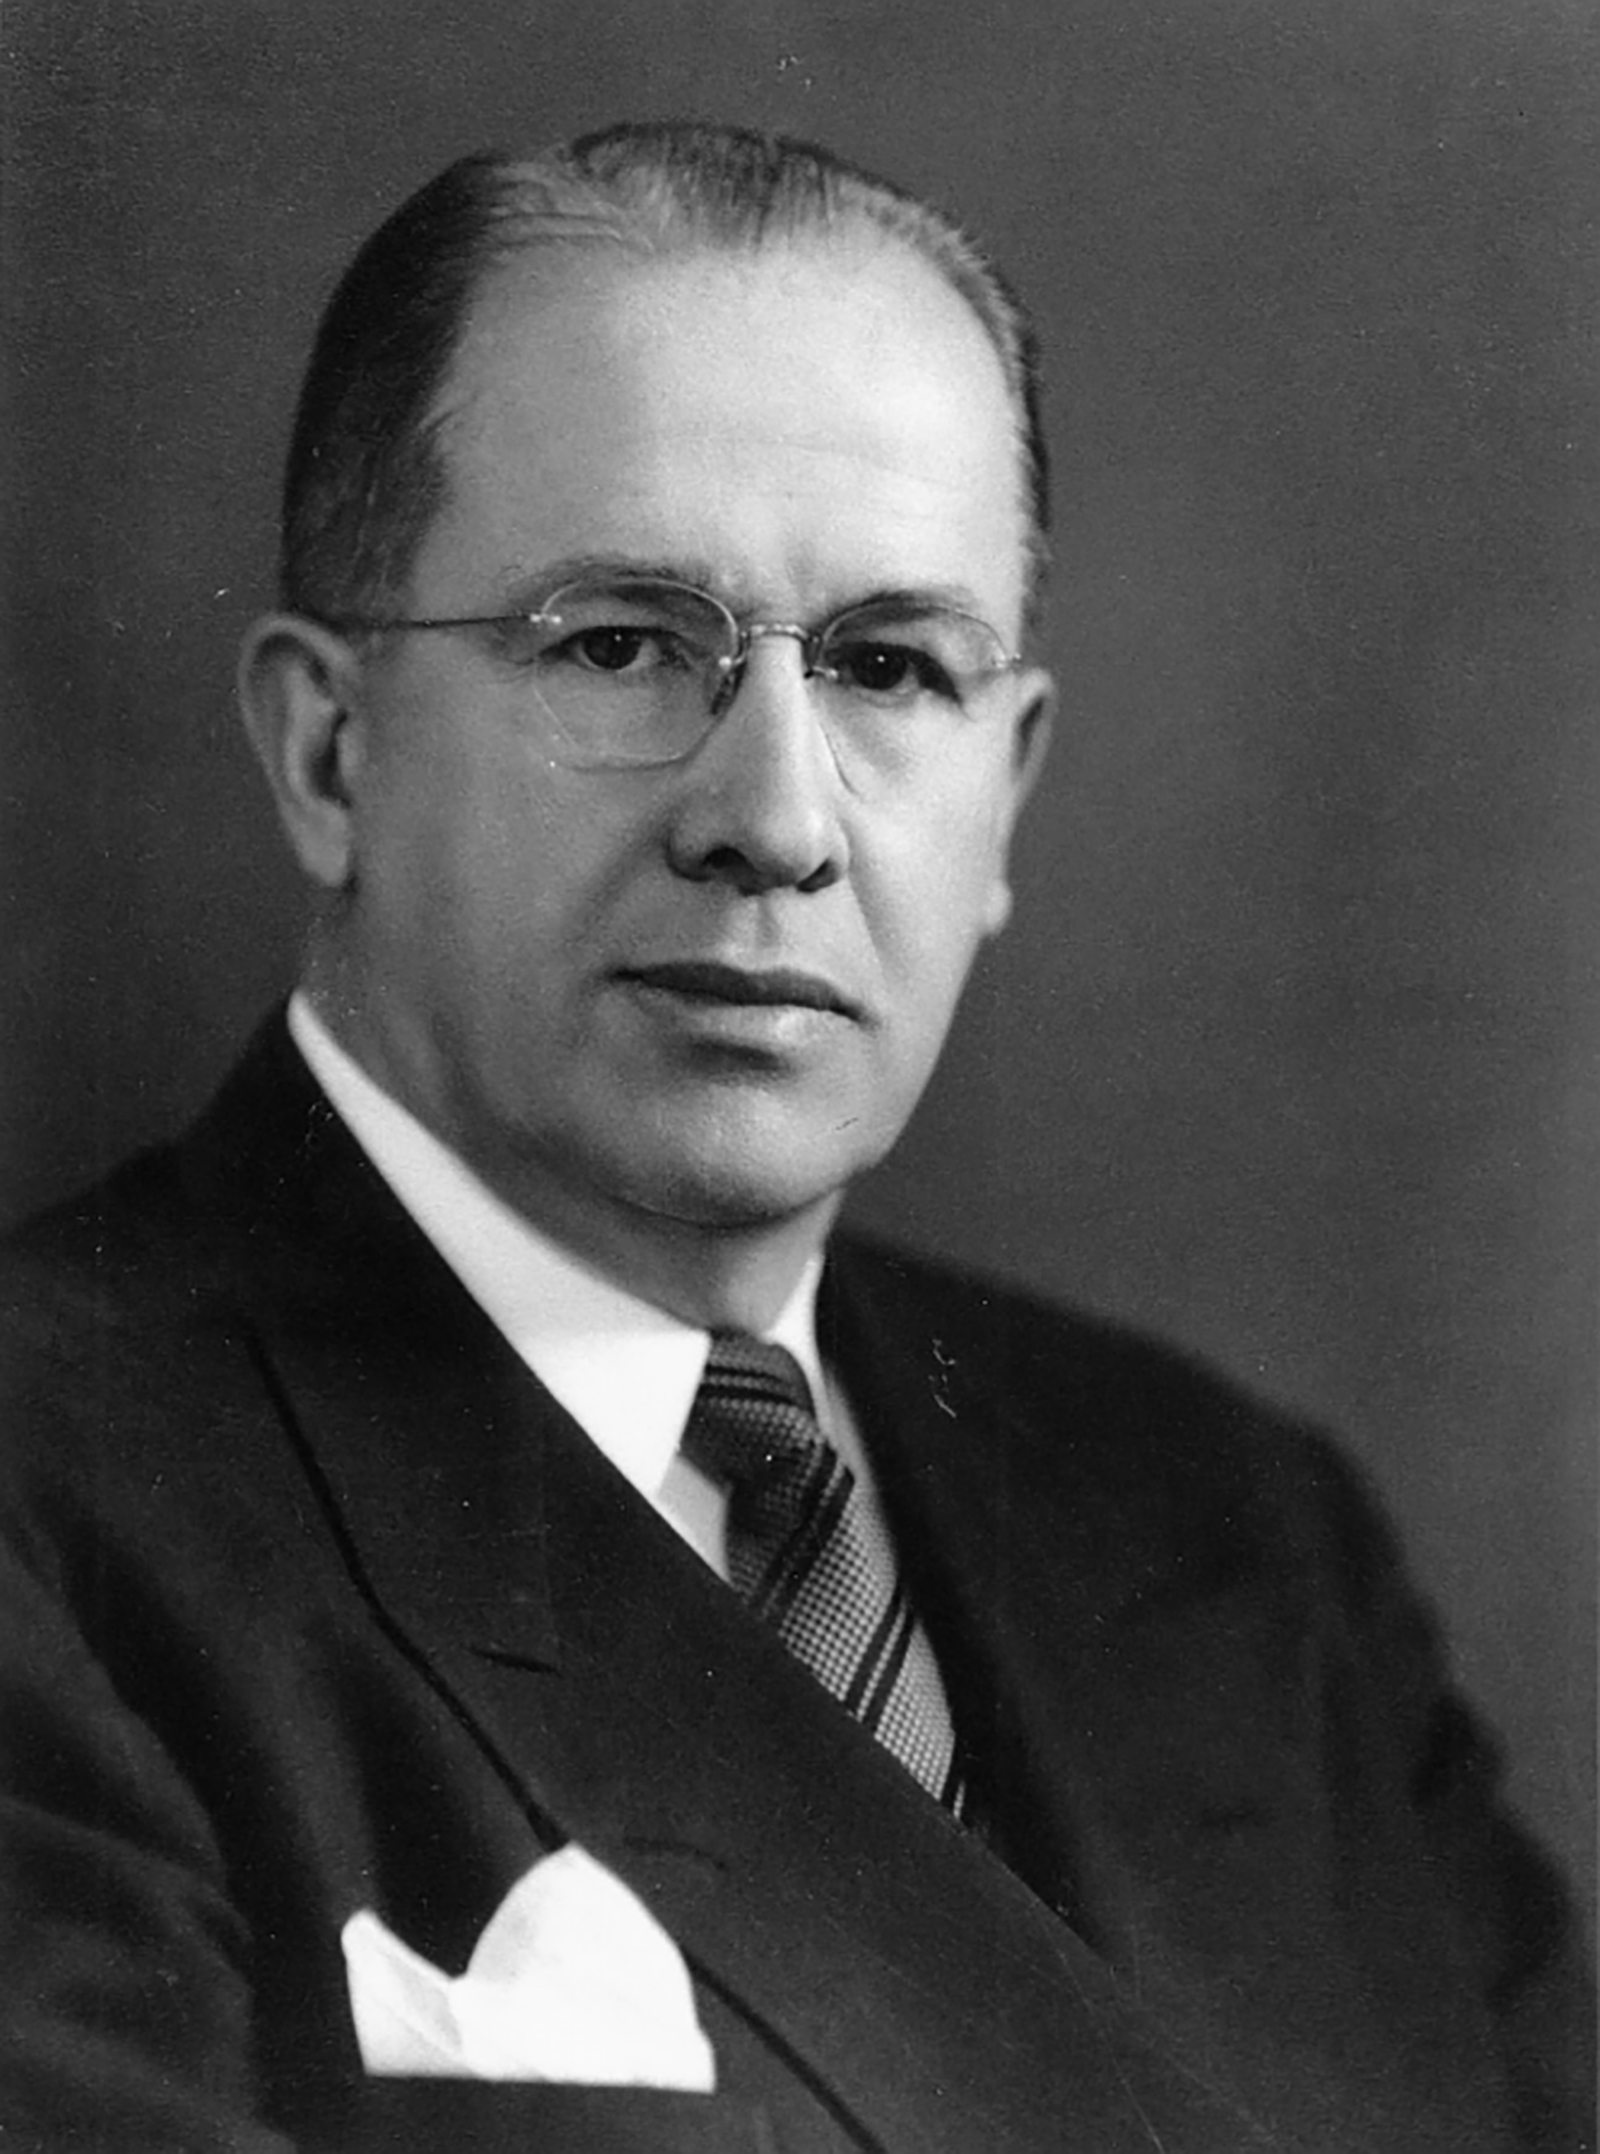 President Ezra Taft Benson